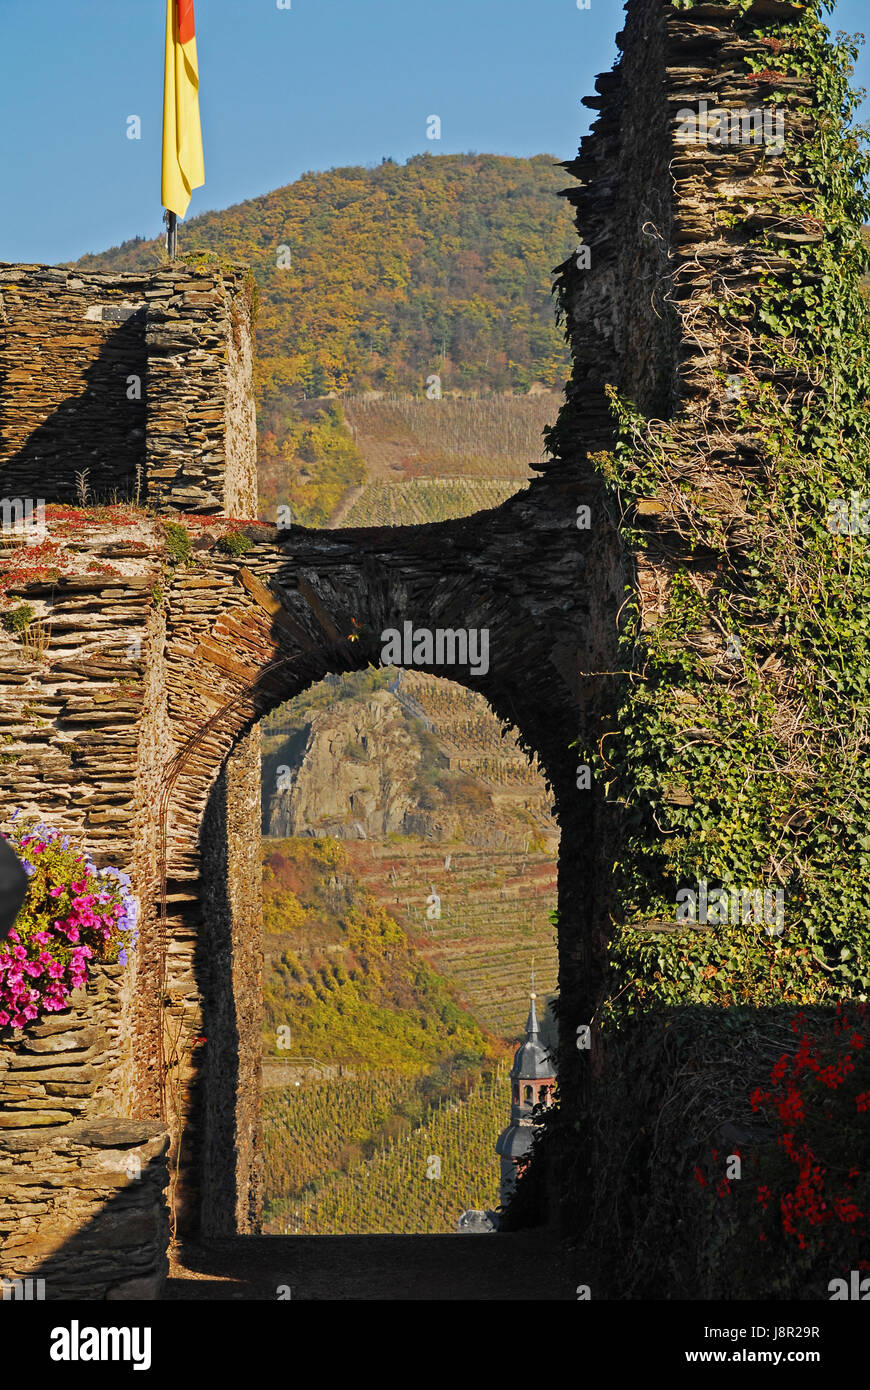 church, ruins, hatchet stone, chateau, castle, church, flower, plant, flowers, Stock Photo